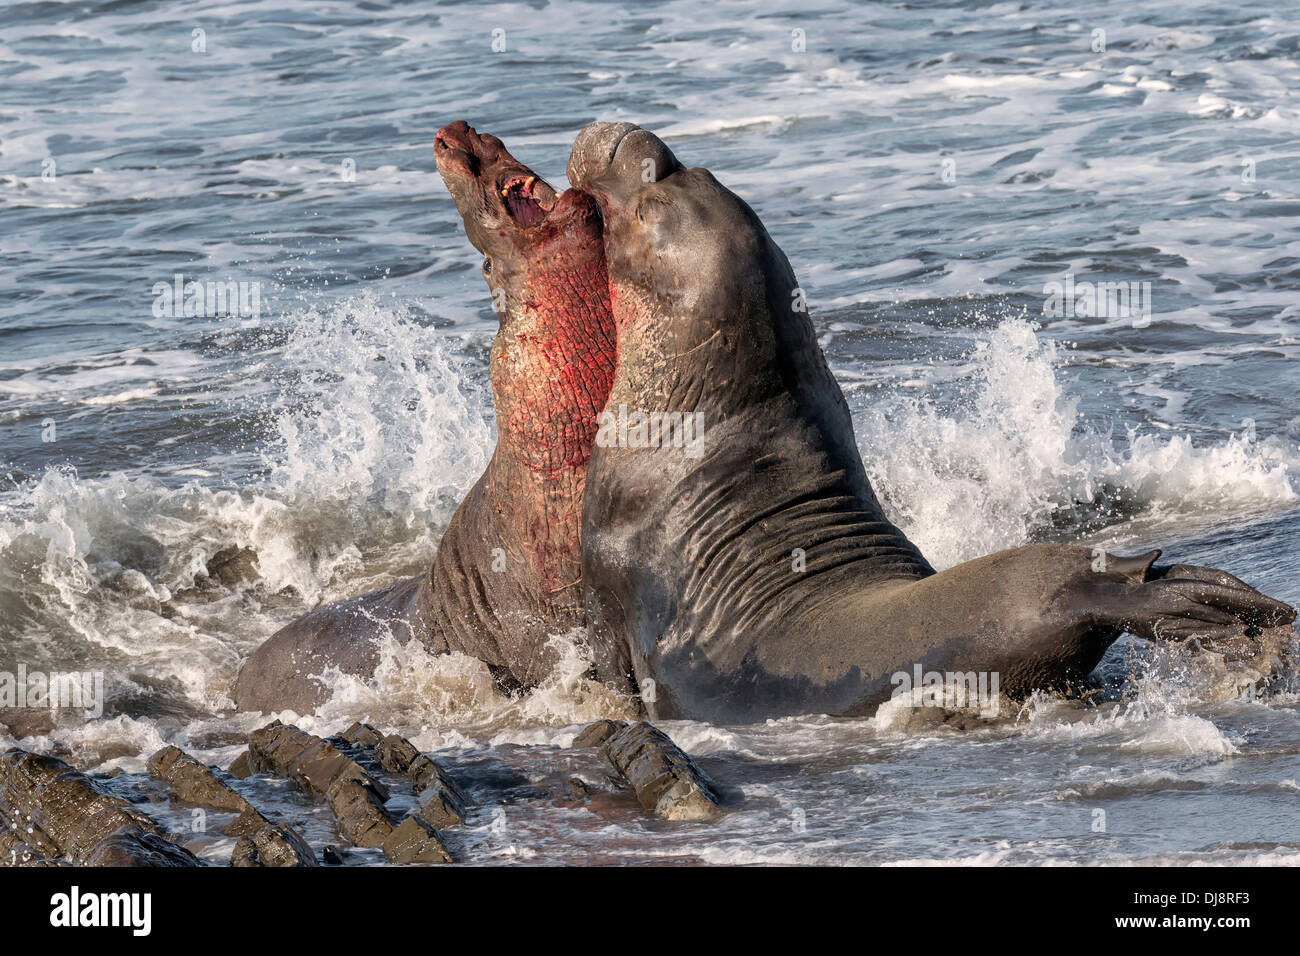 norte-de-elefantes-marinos-machos-adultos-luchan-dj8rf3.jpg